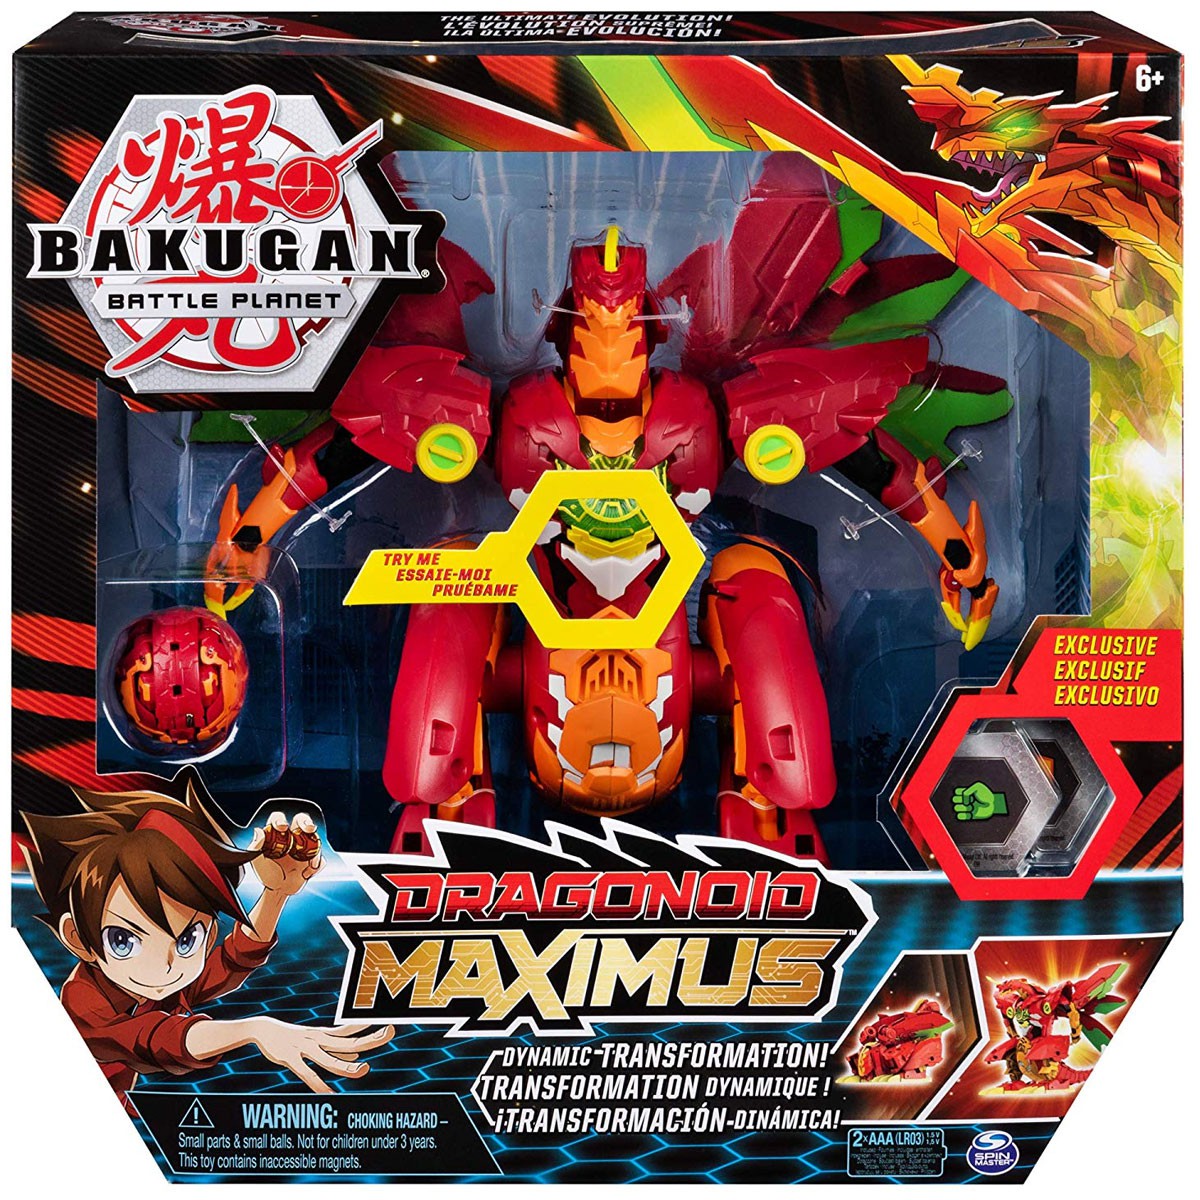 Bakugan Battle Planet Dragonoid Maximus 